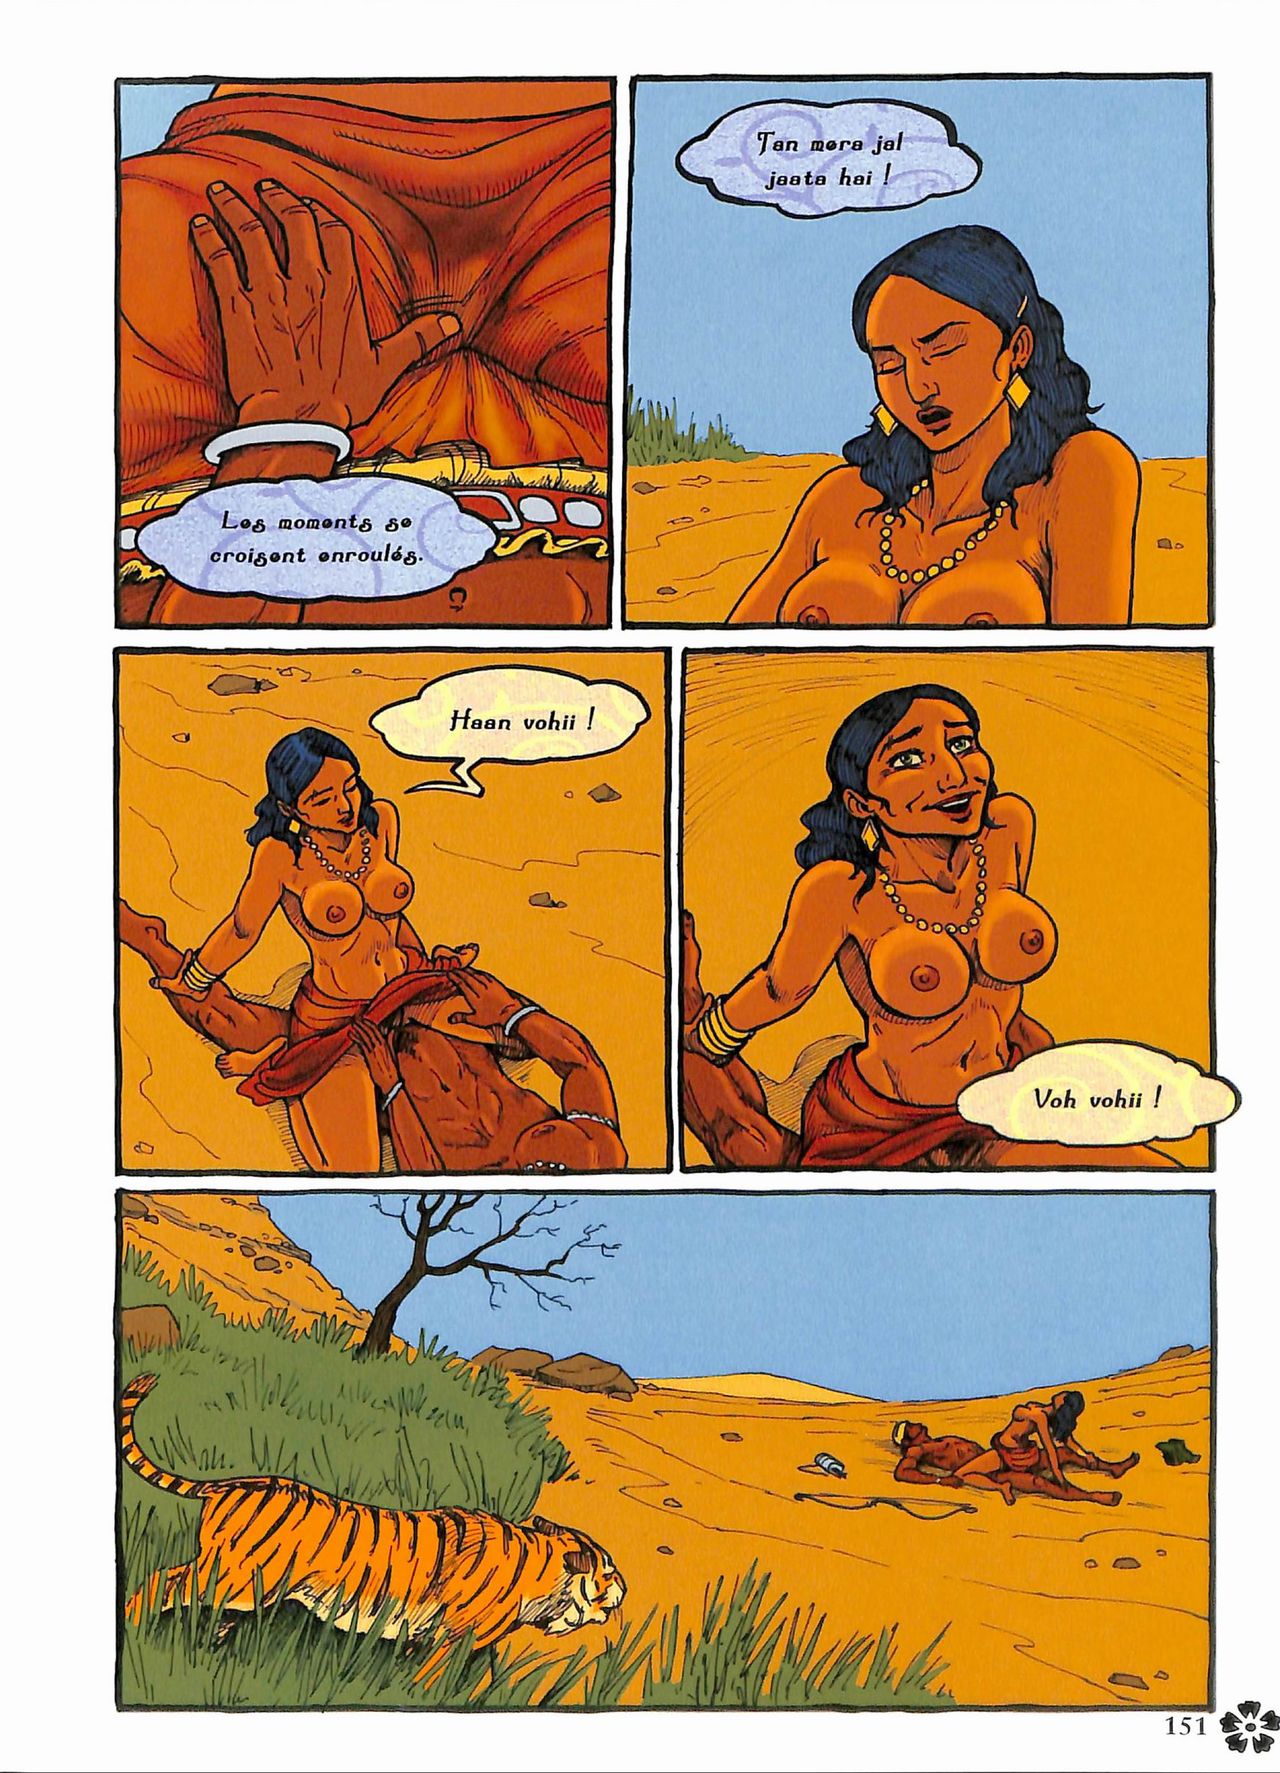 Kama Sutra en bandes dessinées - Kama Sutra with Comics numero d'image 151